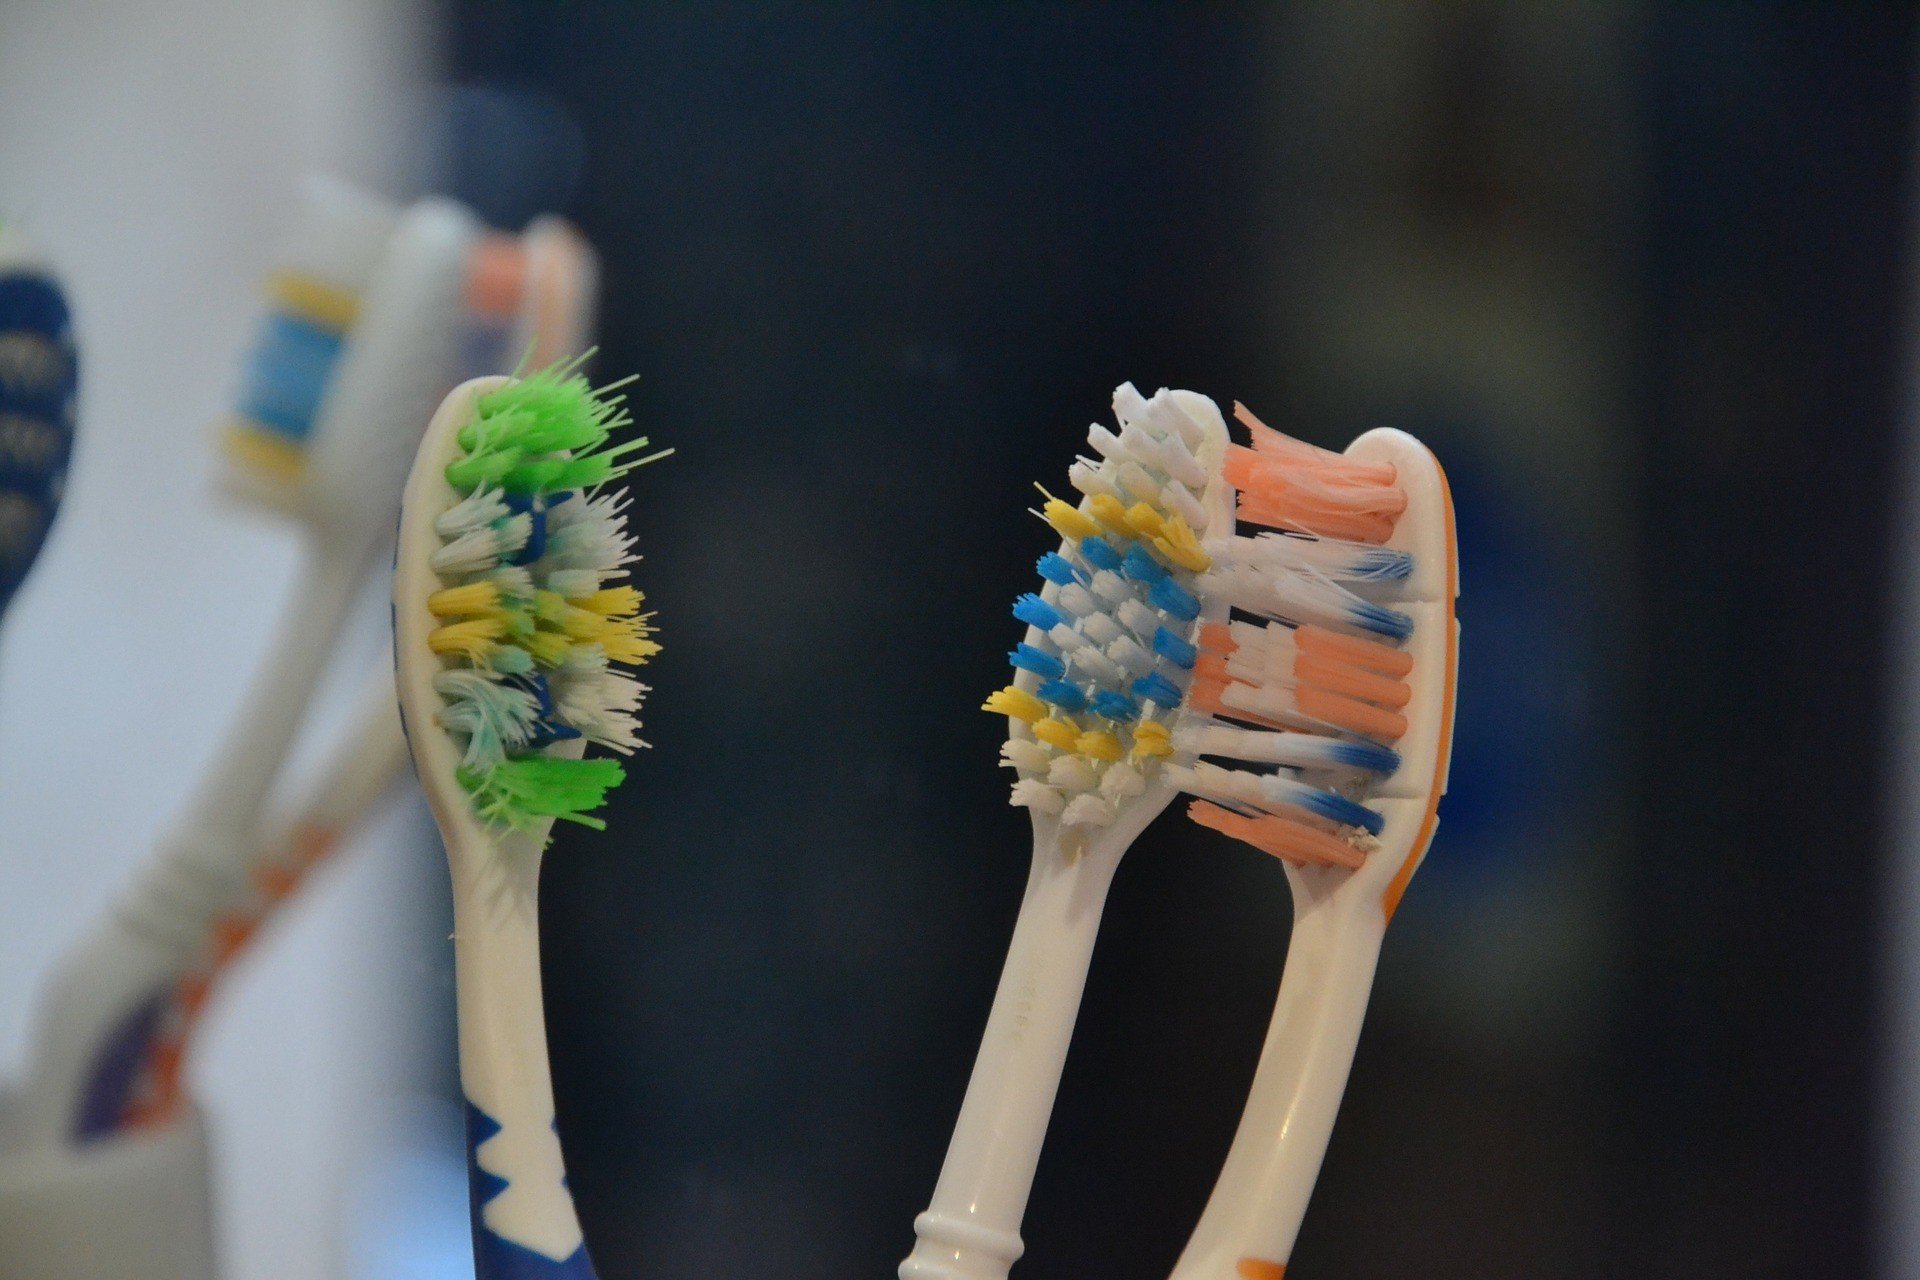 Чистка зубов защитит от коронавируса - стоматолог